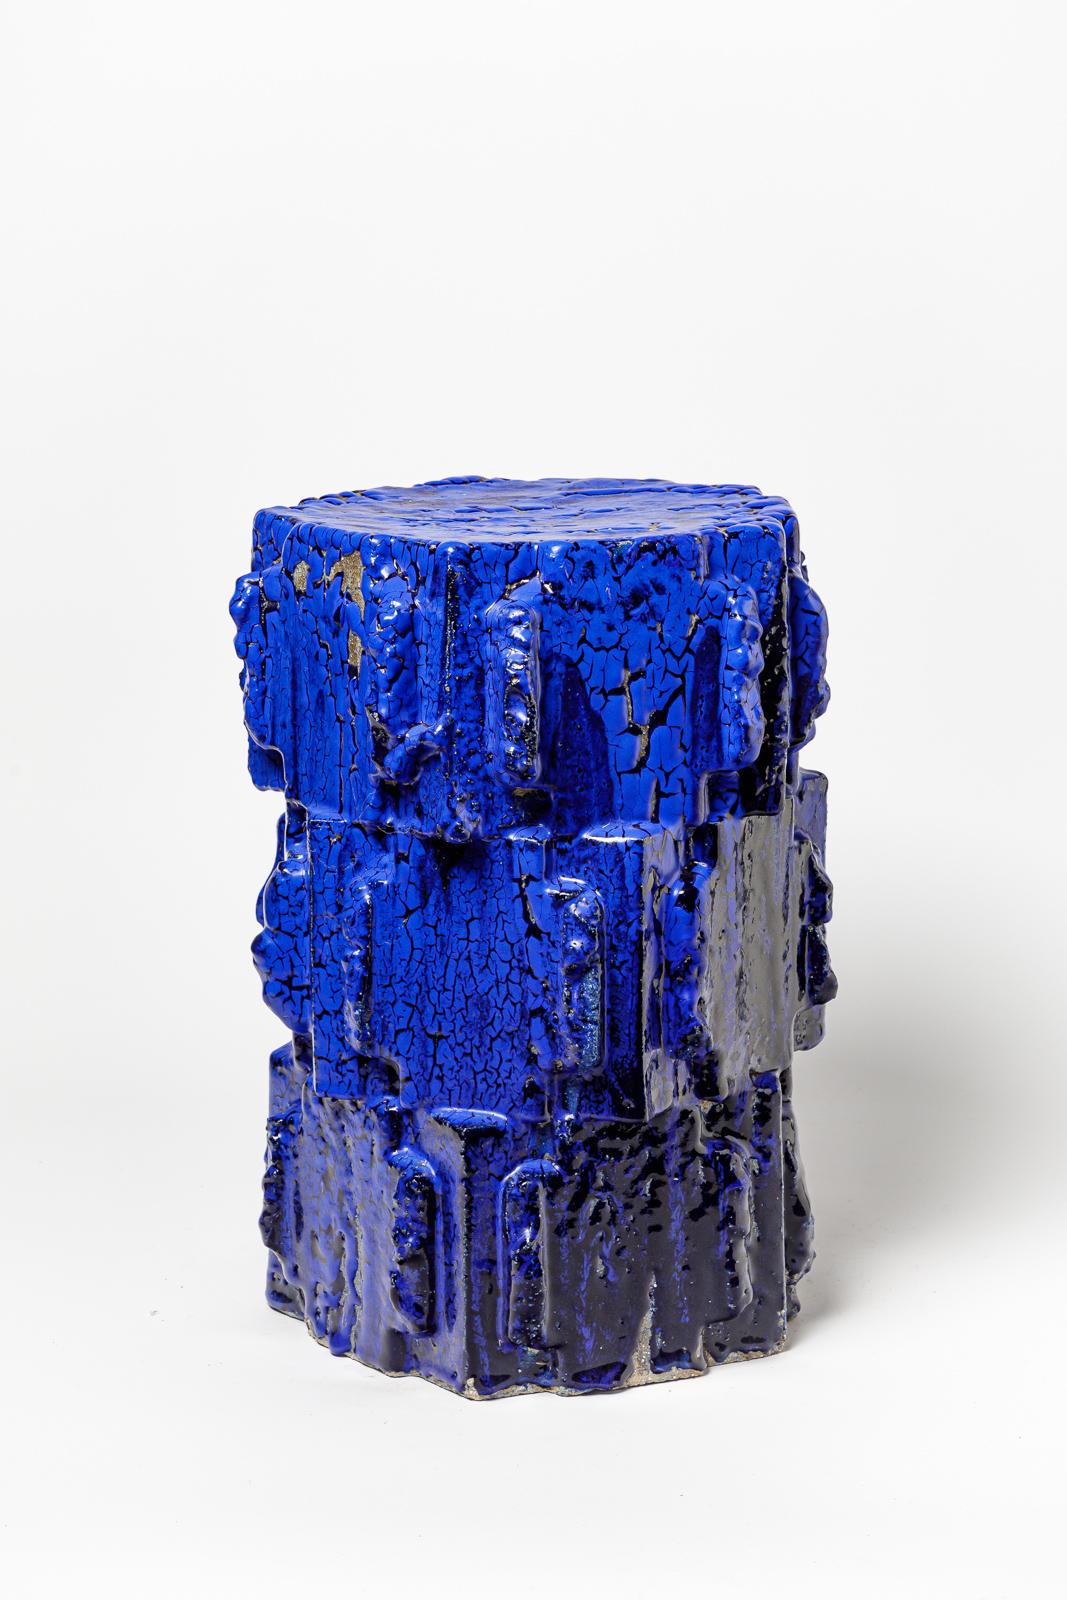 Blue glazed bollène stoneware stool by Jean Ponsart.
Artist monogram at the base. 2023.
H : 17.5’ x 11.2’ x 11.2 inches.